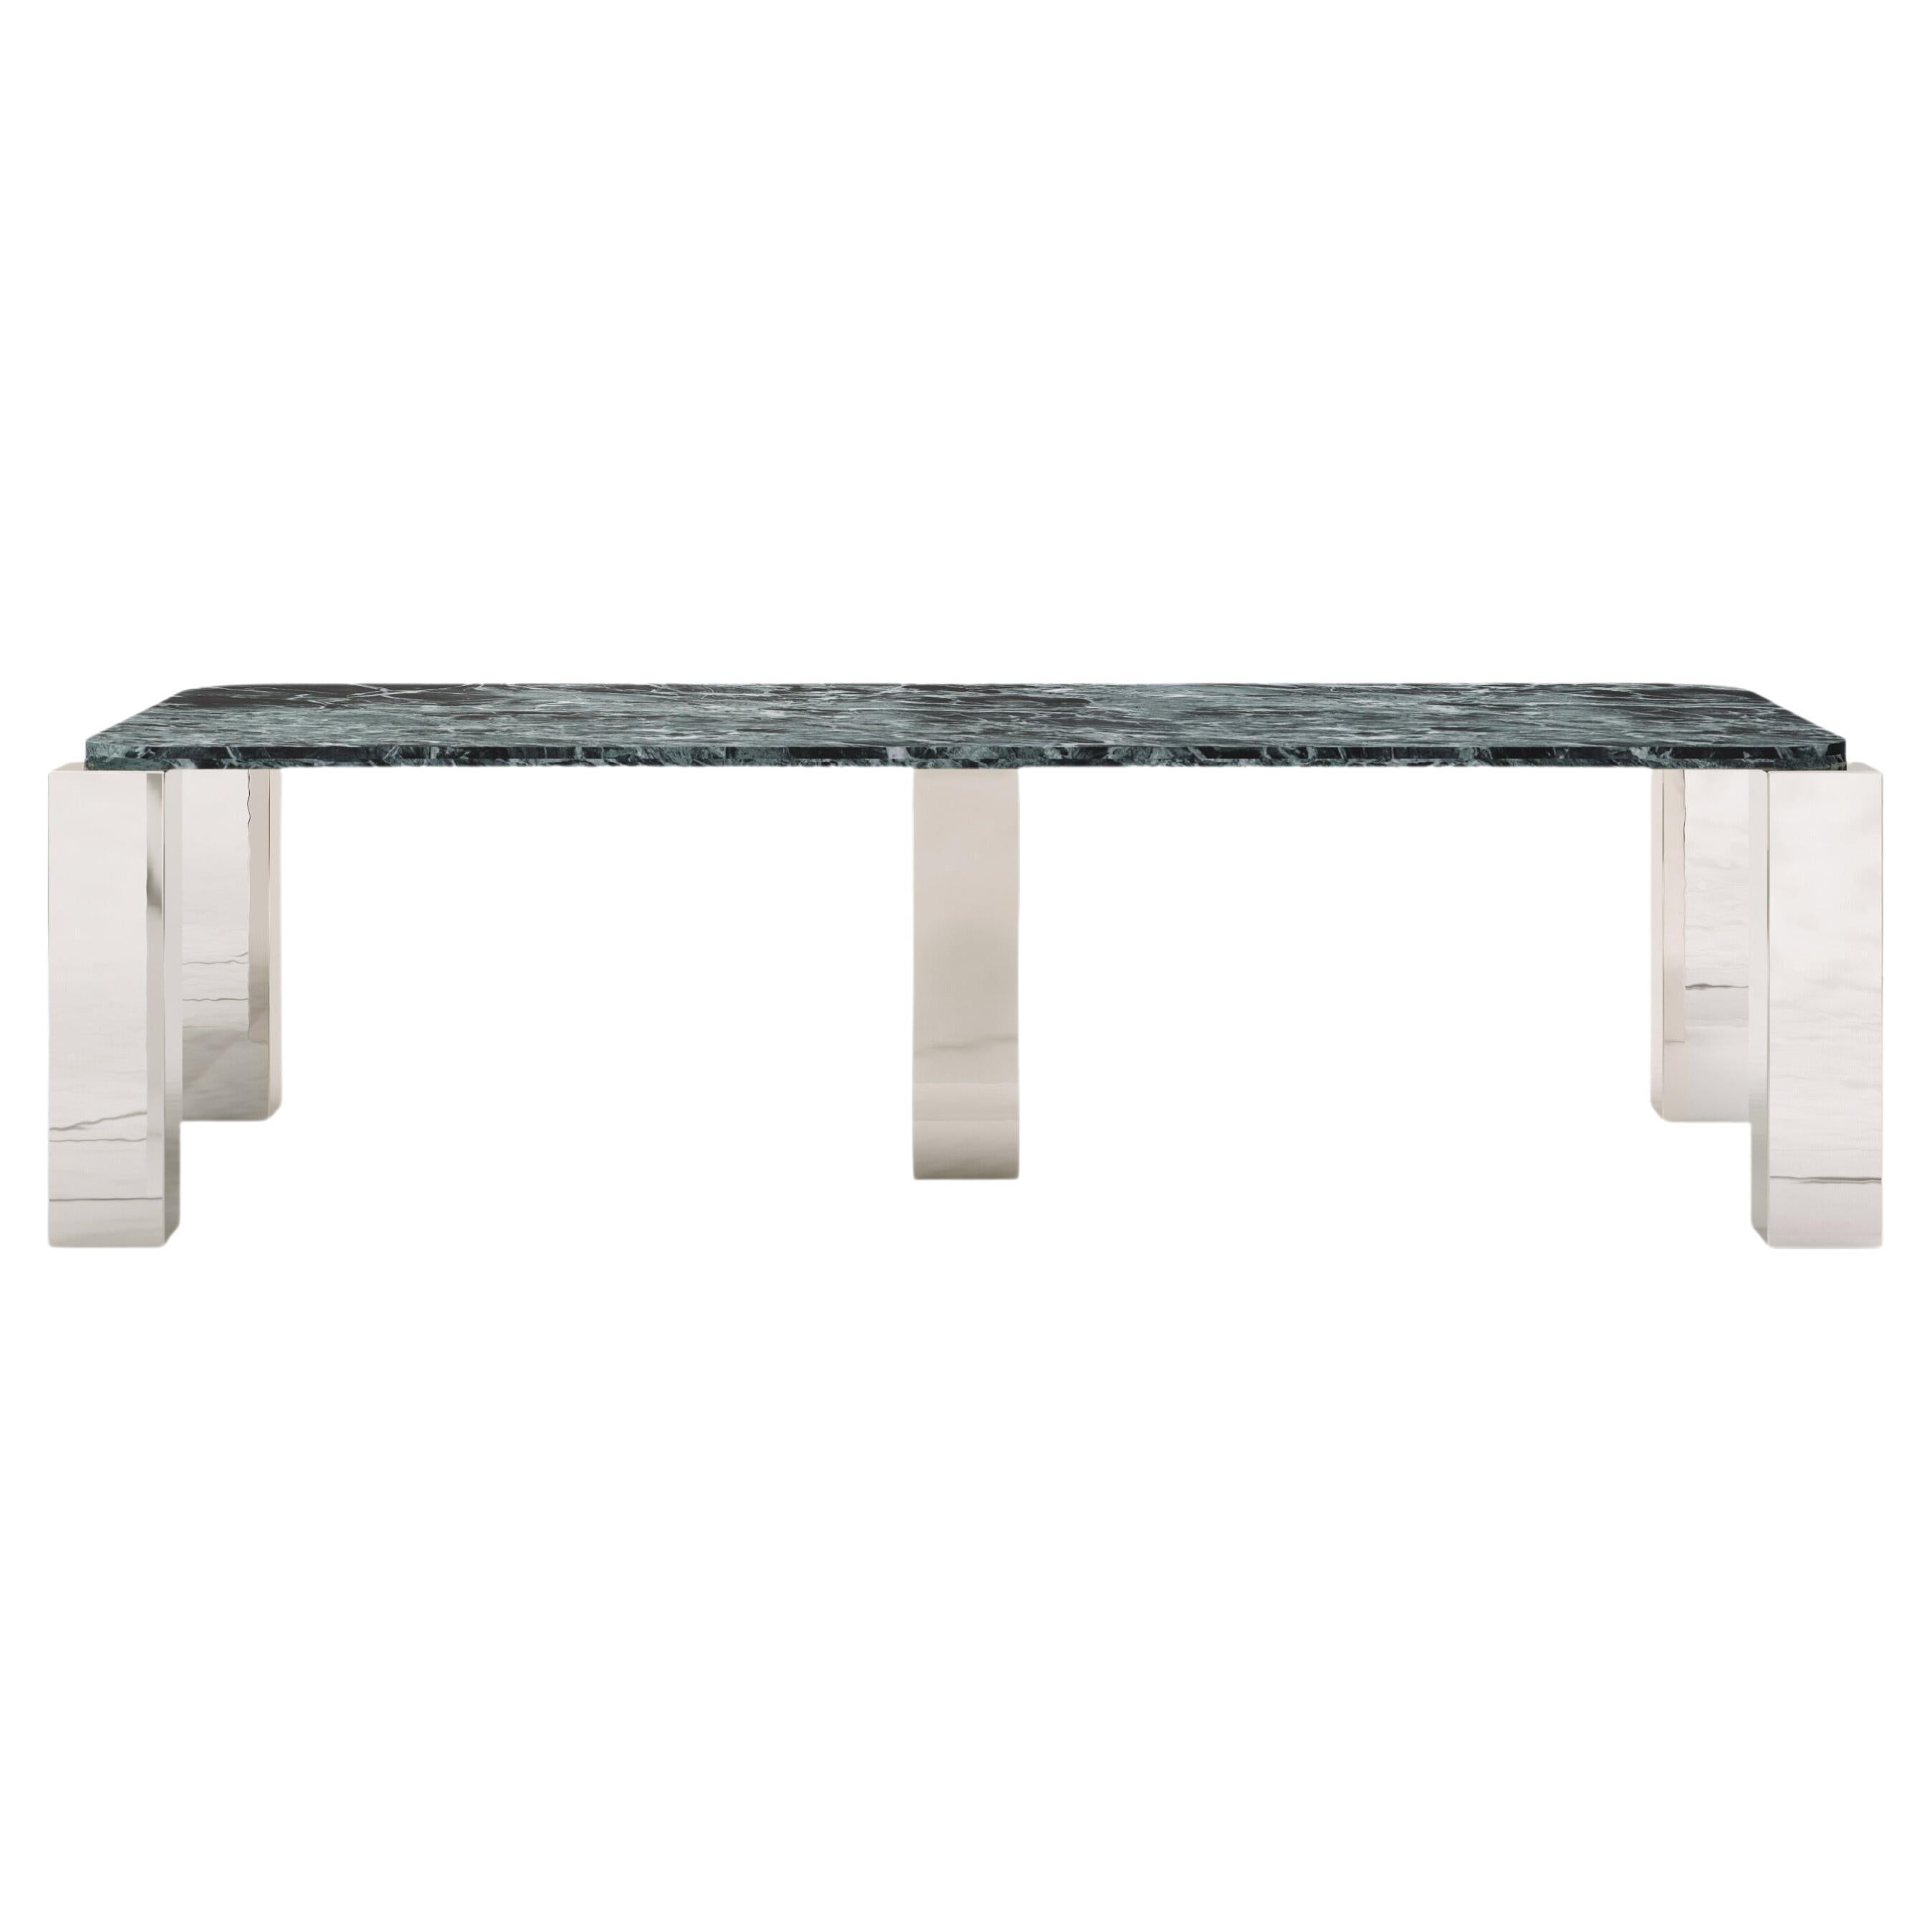 FORM(LA) Cubo Rectangle Dining Table 98”L x 44”W x 30”H Verde Marble & Chrome